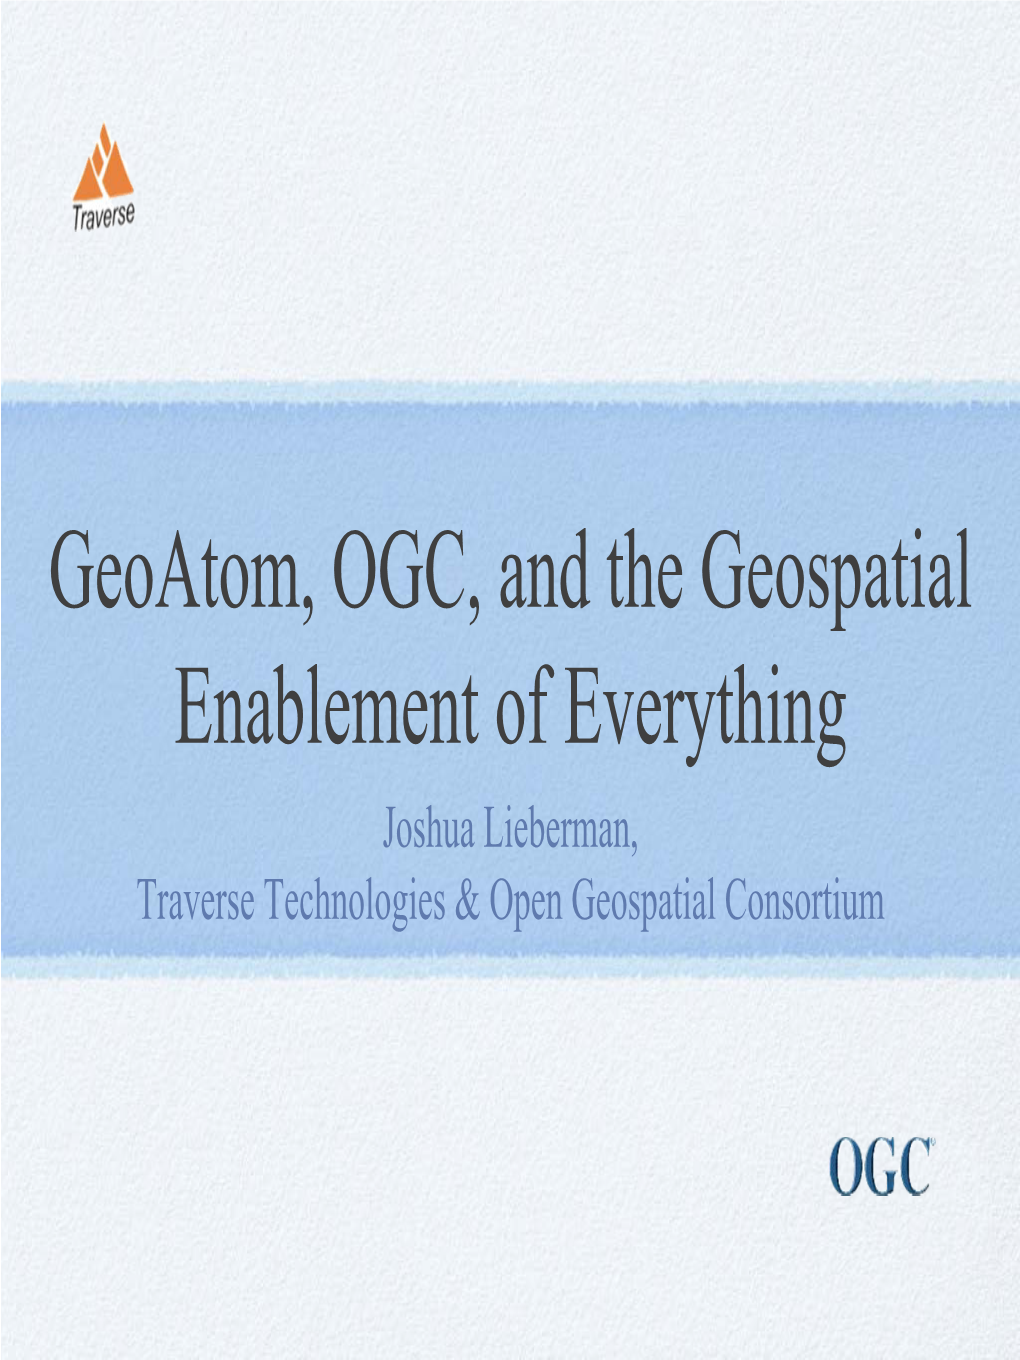 Geoatom, OGC, and the Geospatial Enablement of Everything Joshua Lieberman, Traverse Technologies & Open Geospatial Consortium Scope